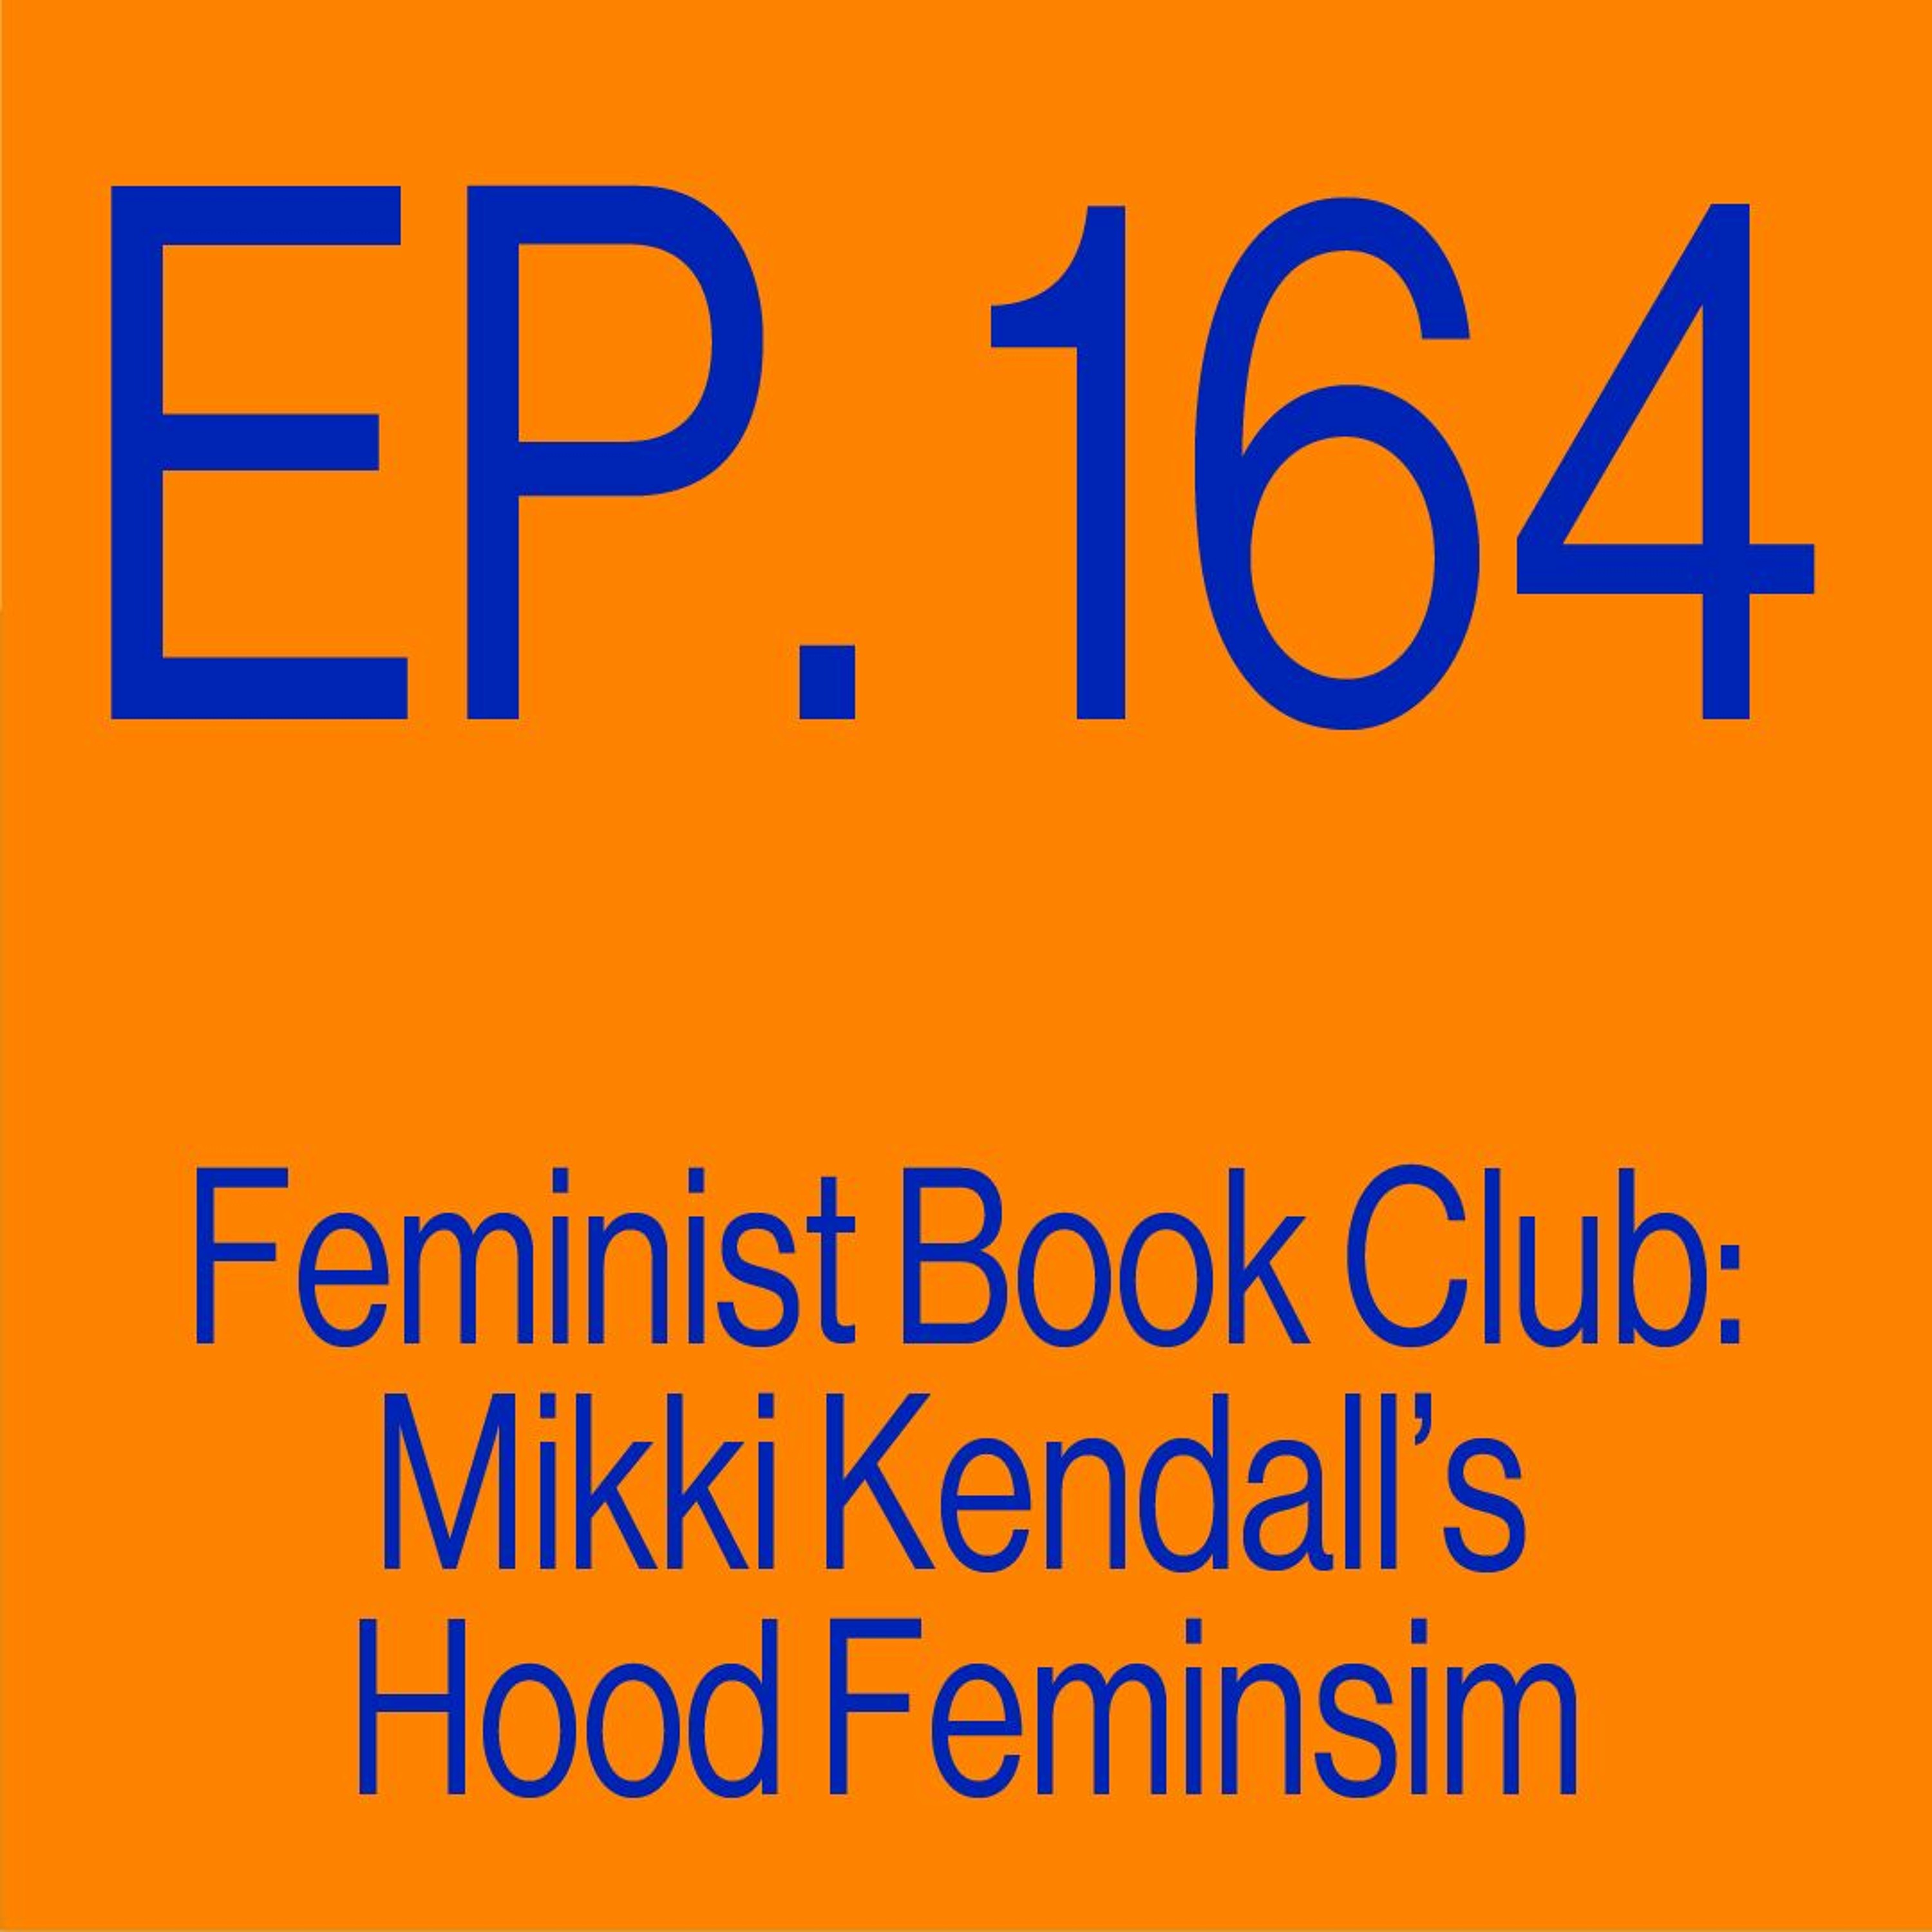 Episode 164: Feminist Book Club: Mikki Kendall’s Hood Feminism